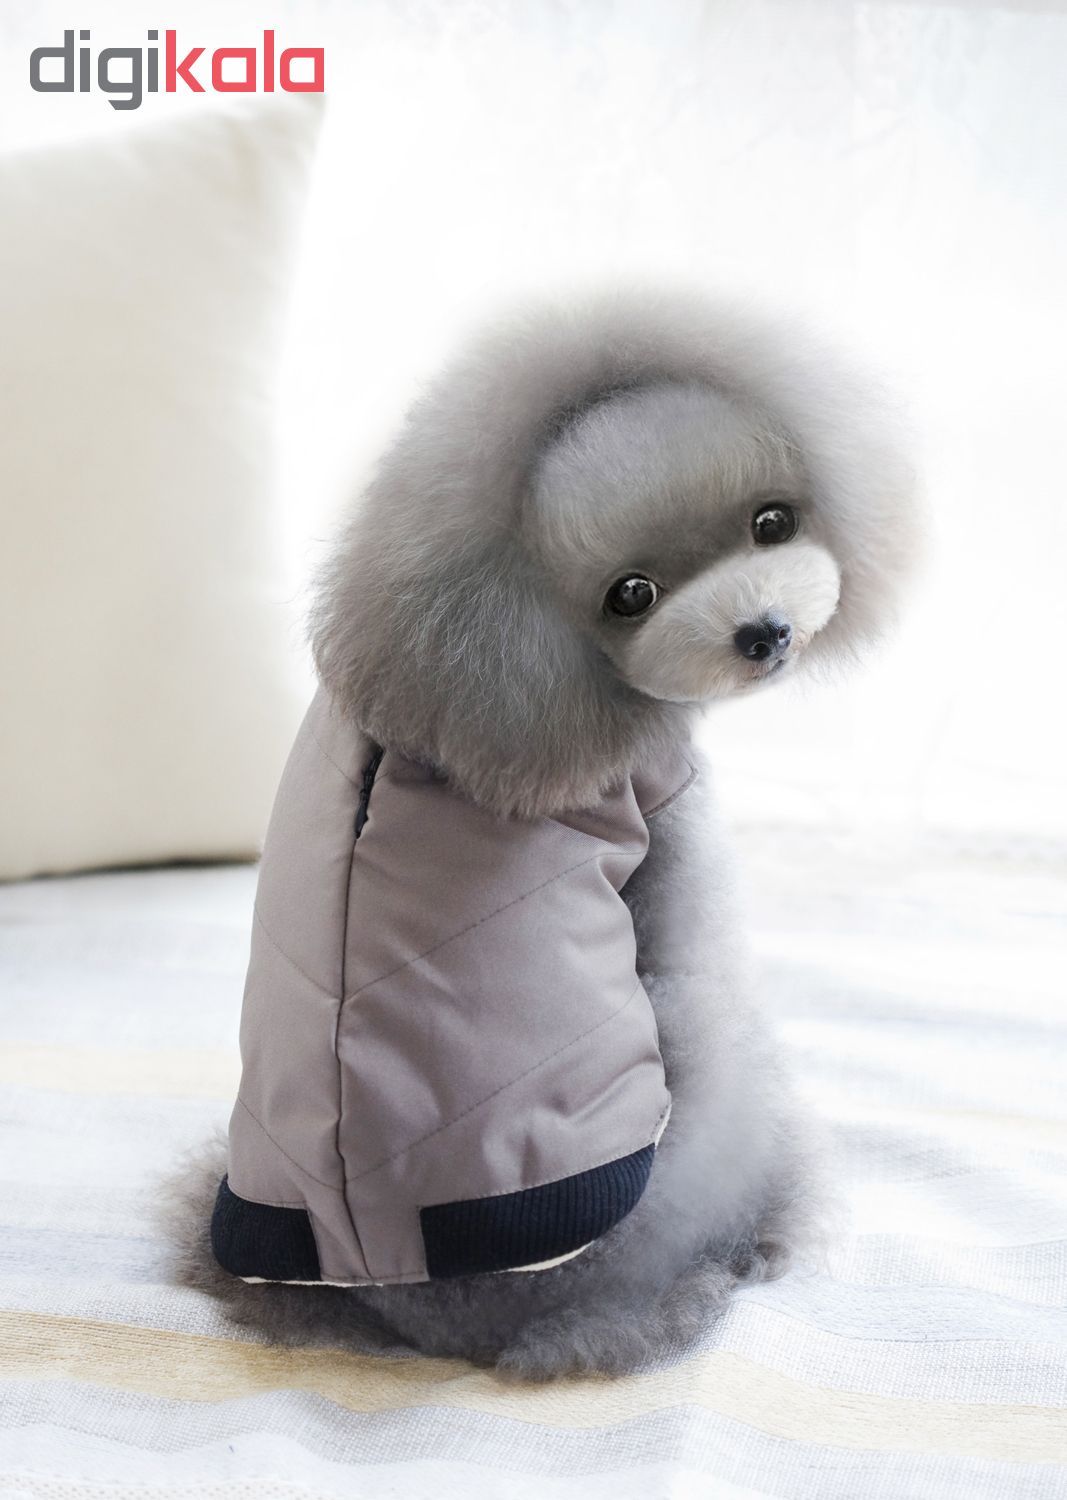 لباس سگ مدل over coat 1 کد 1 سایز L